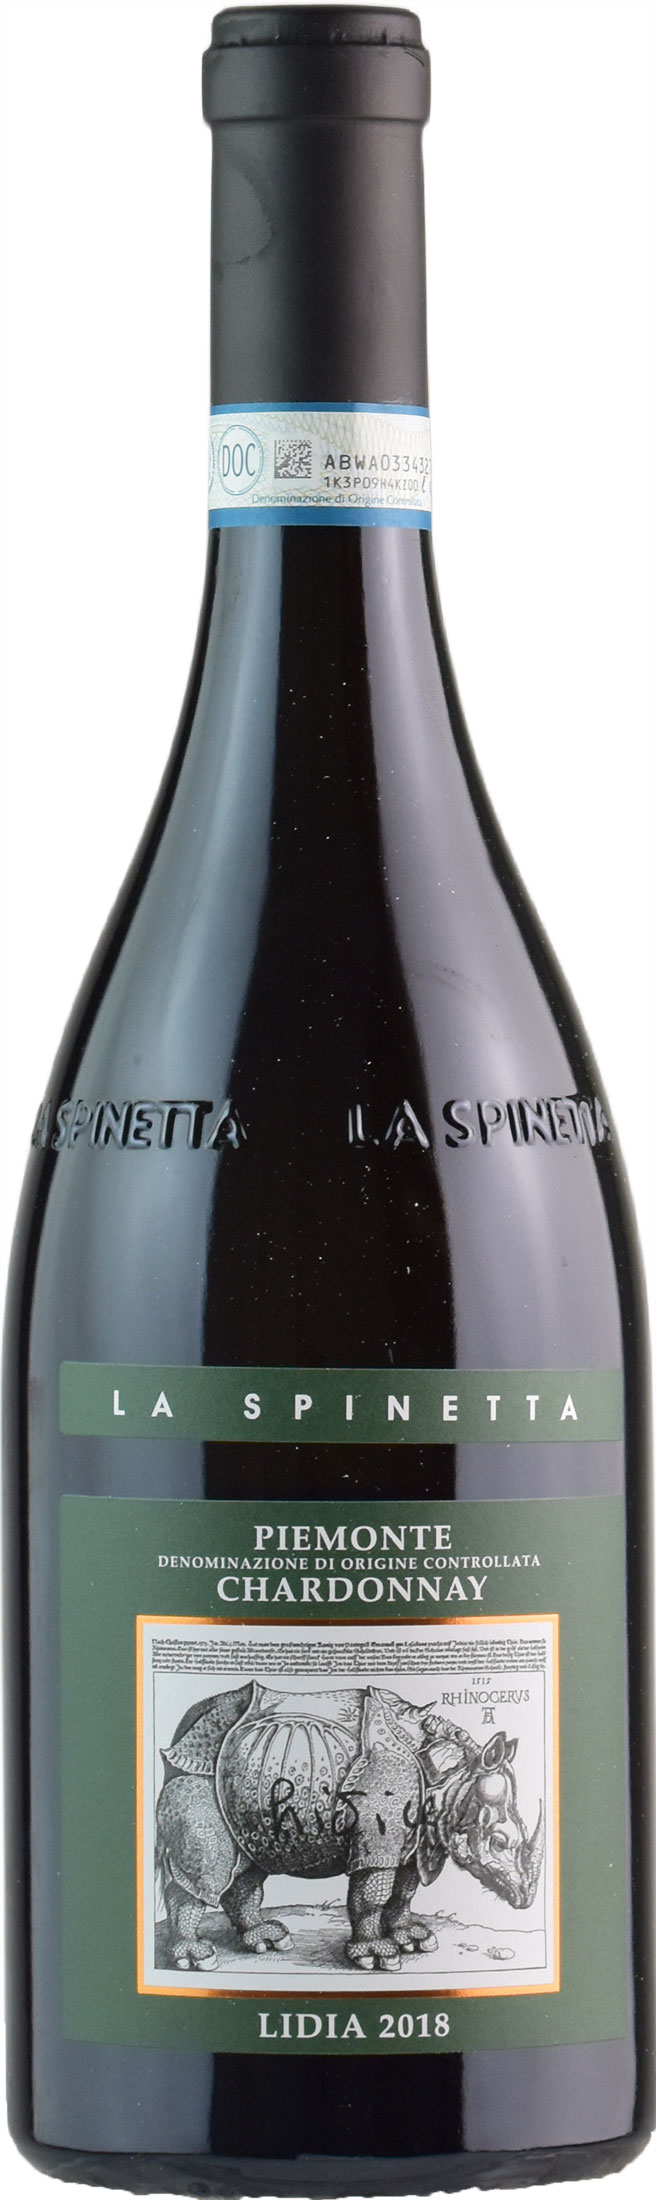 La Spinetta Langhe Chardonnay Lidia 2018